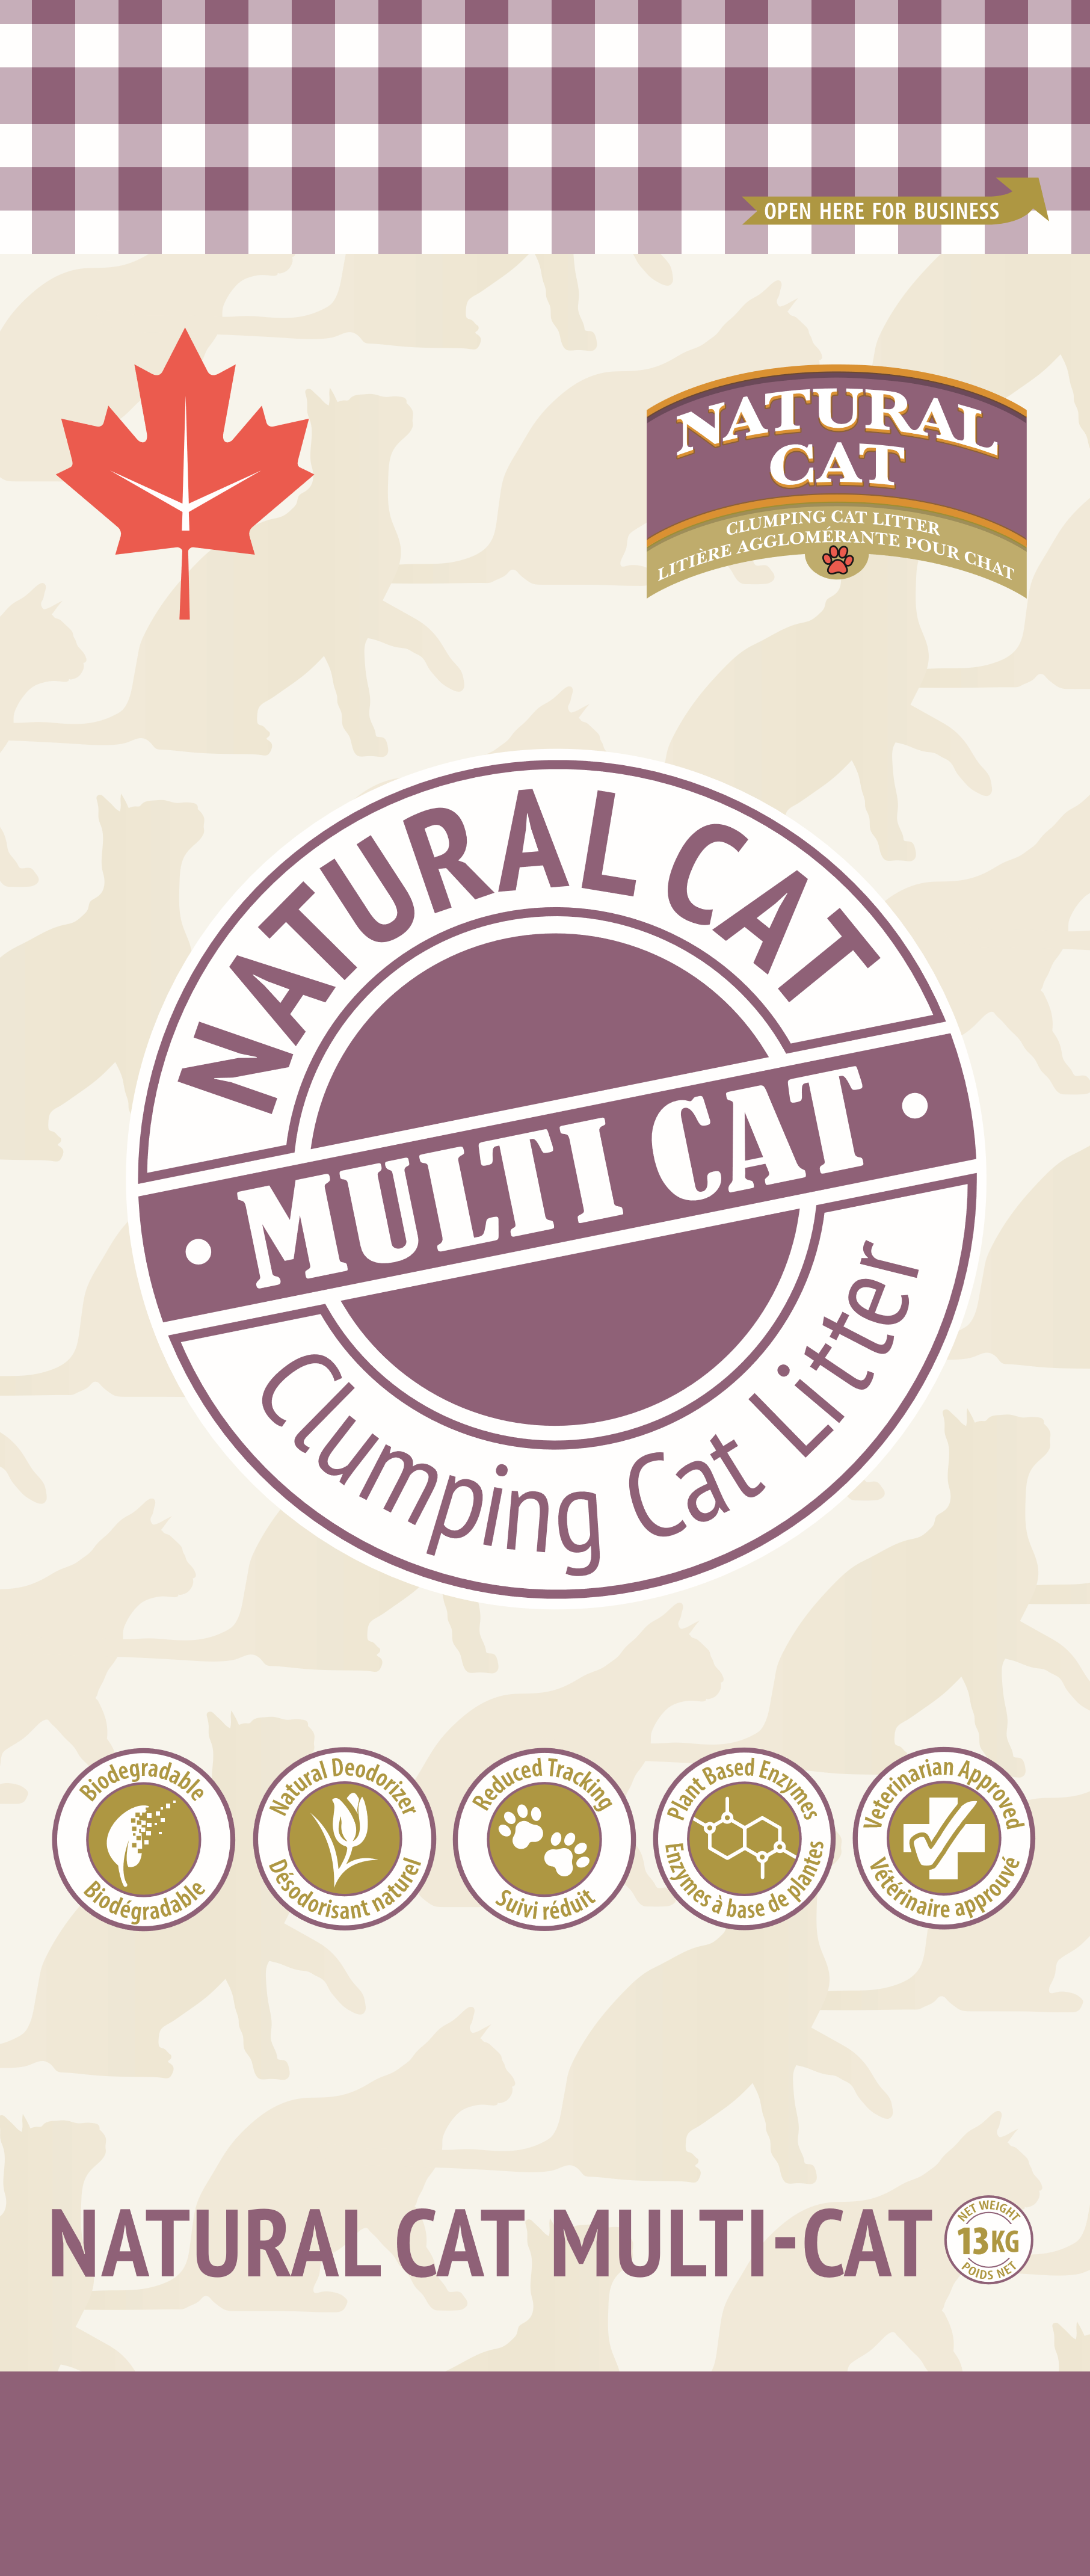 Otter Co-op Natural Cat Multi-Cat Litter 13kg